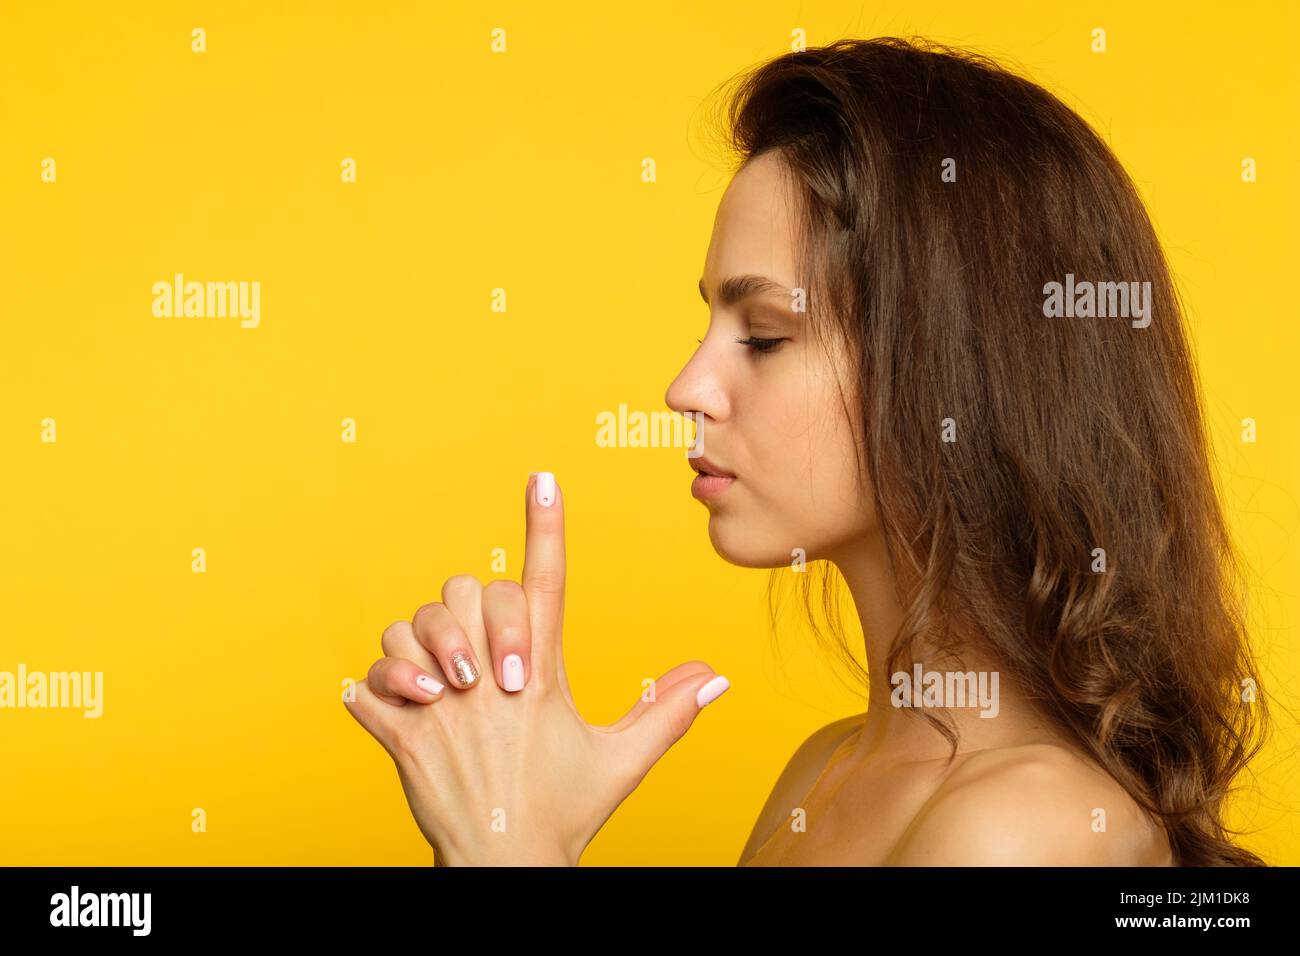 female spy finger gun confident determined woman Stock Photo